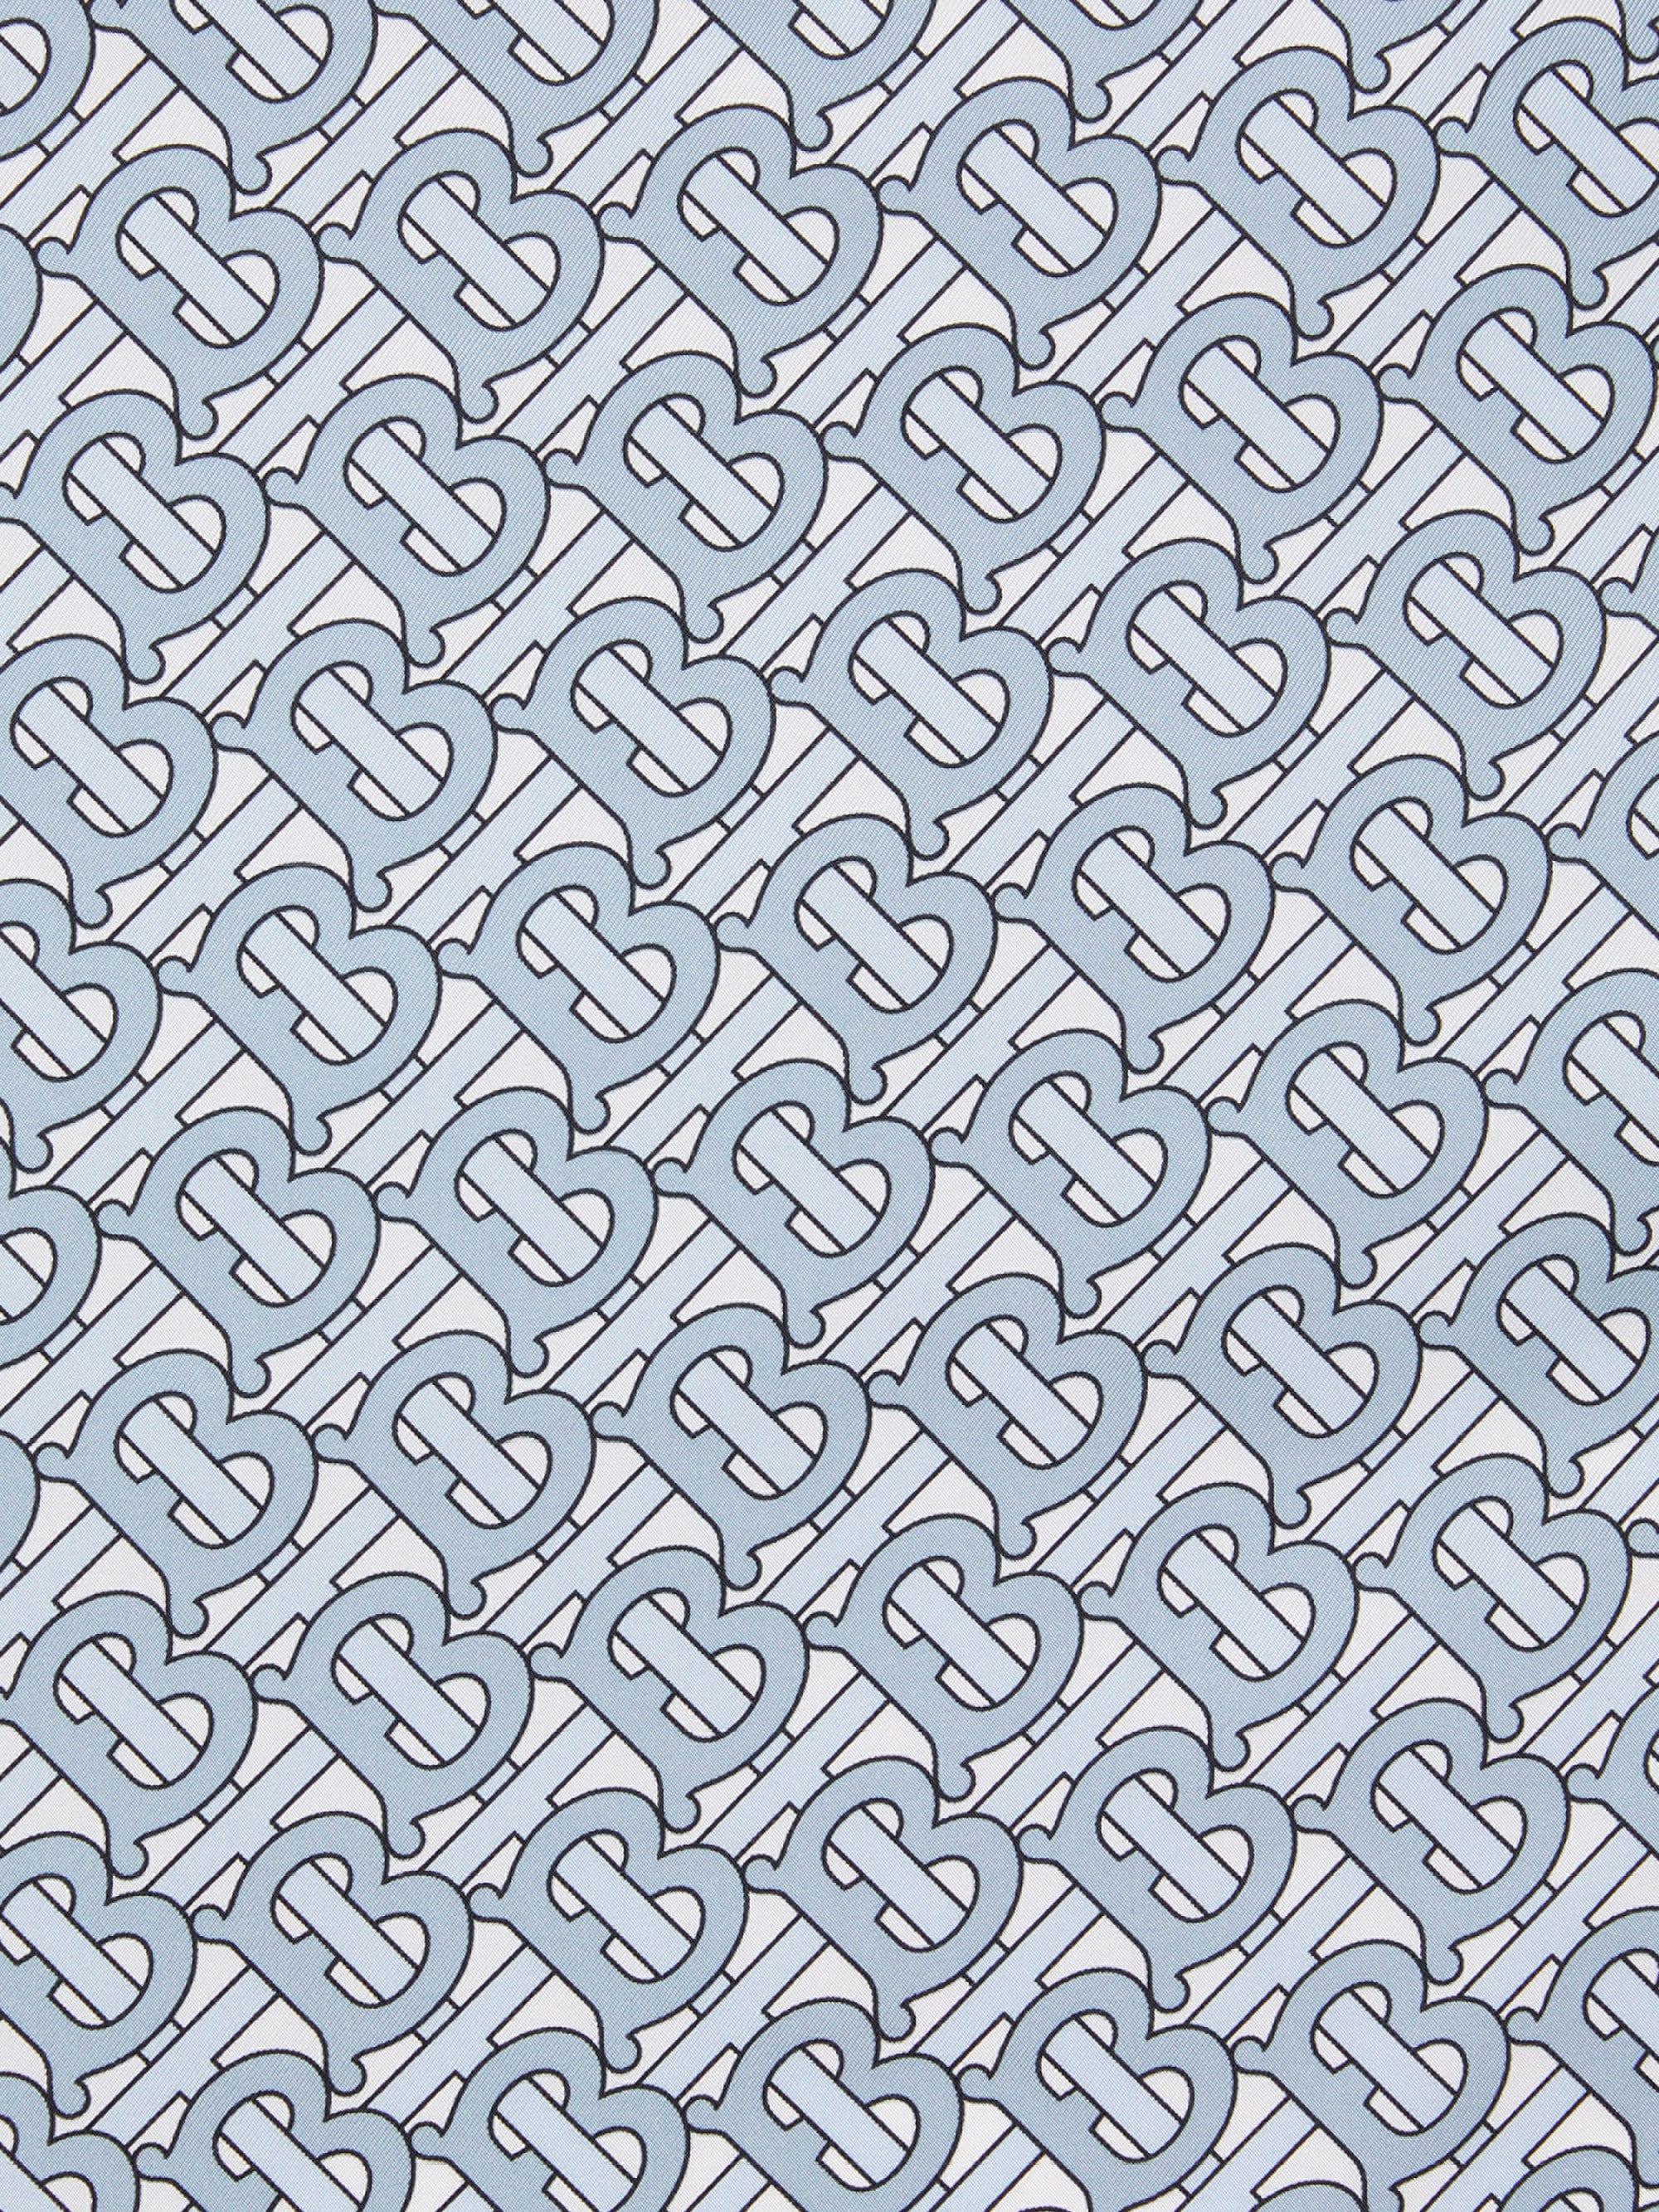 Burberry Monogram Print Silk Square Scarf In Brown